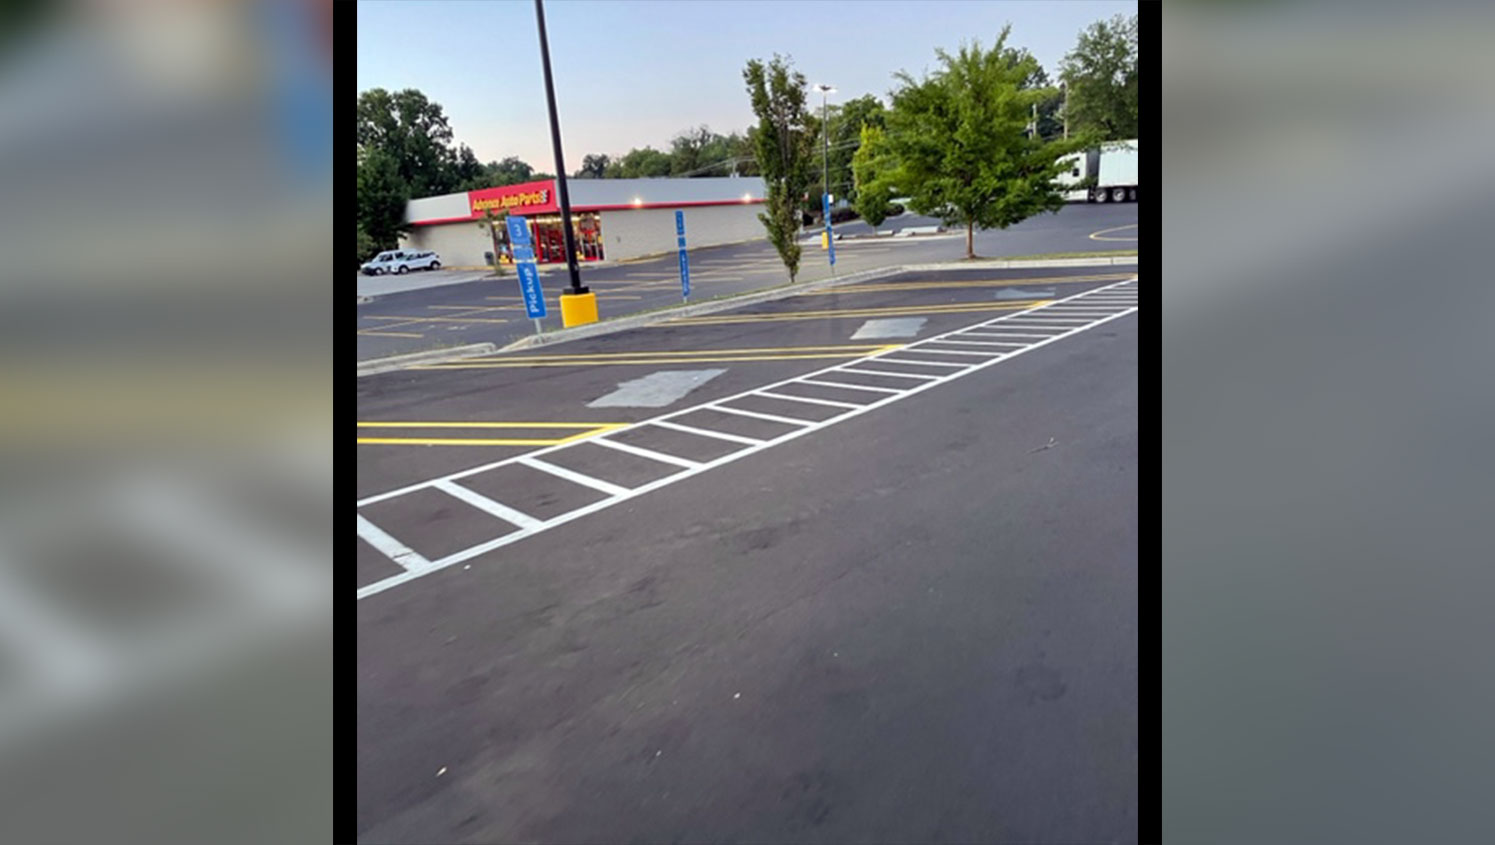 re-striped no parking lot markings at greensboro walmart